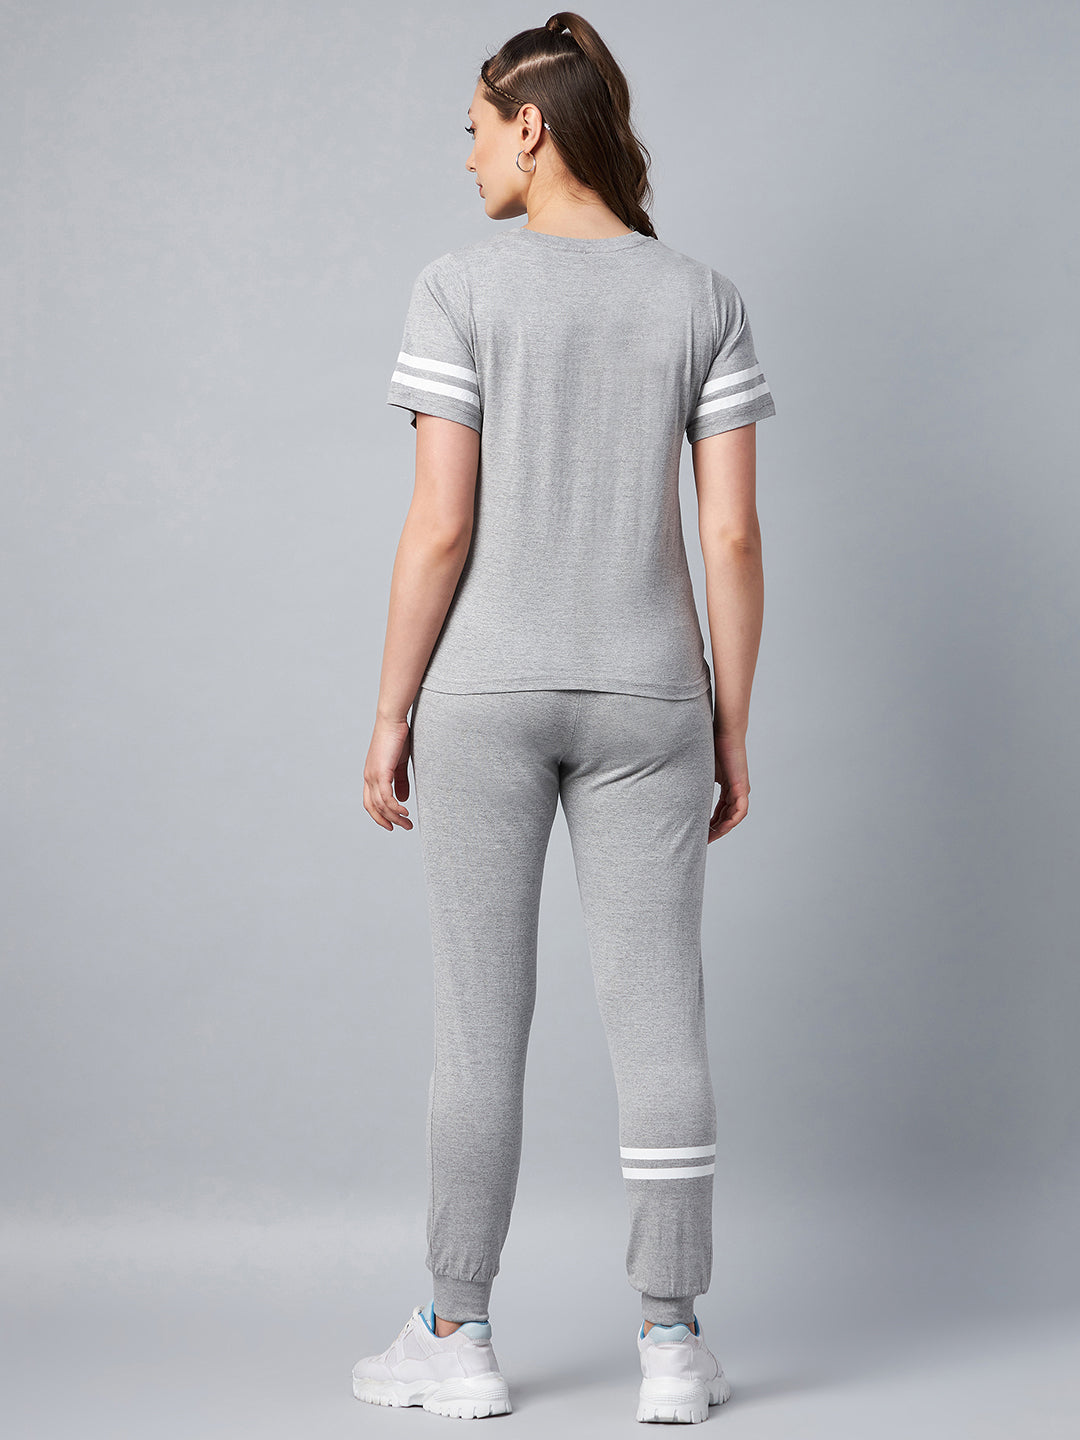 Women's Grey Striped Cotton Tracksuit Set